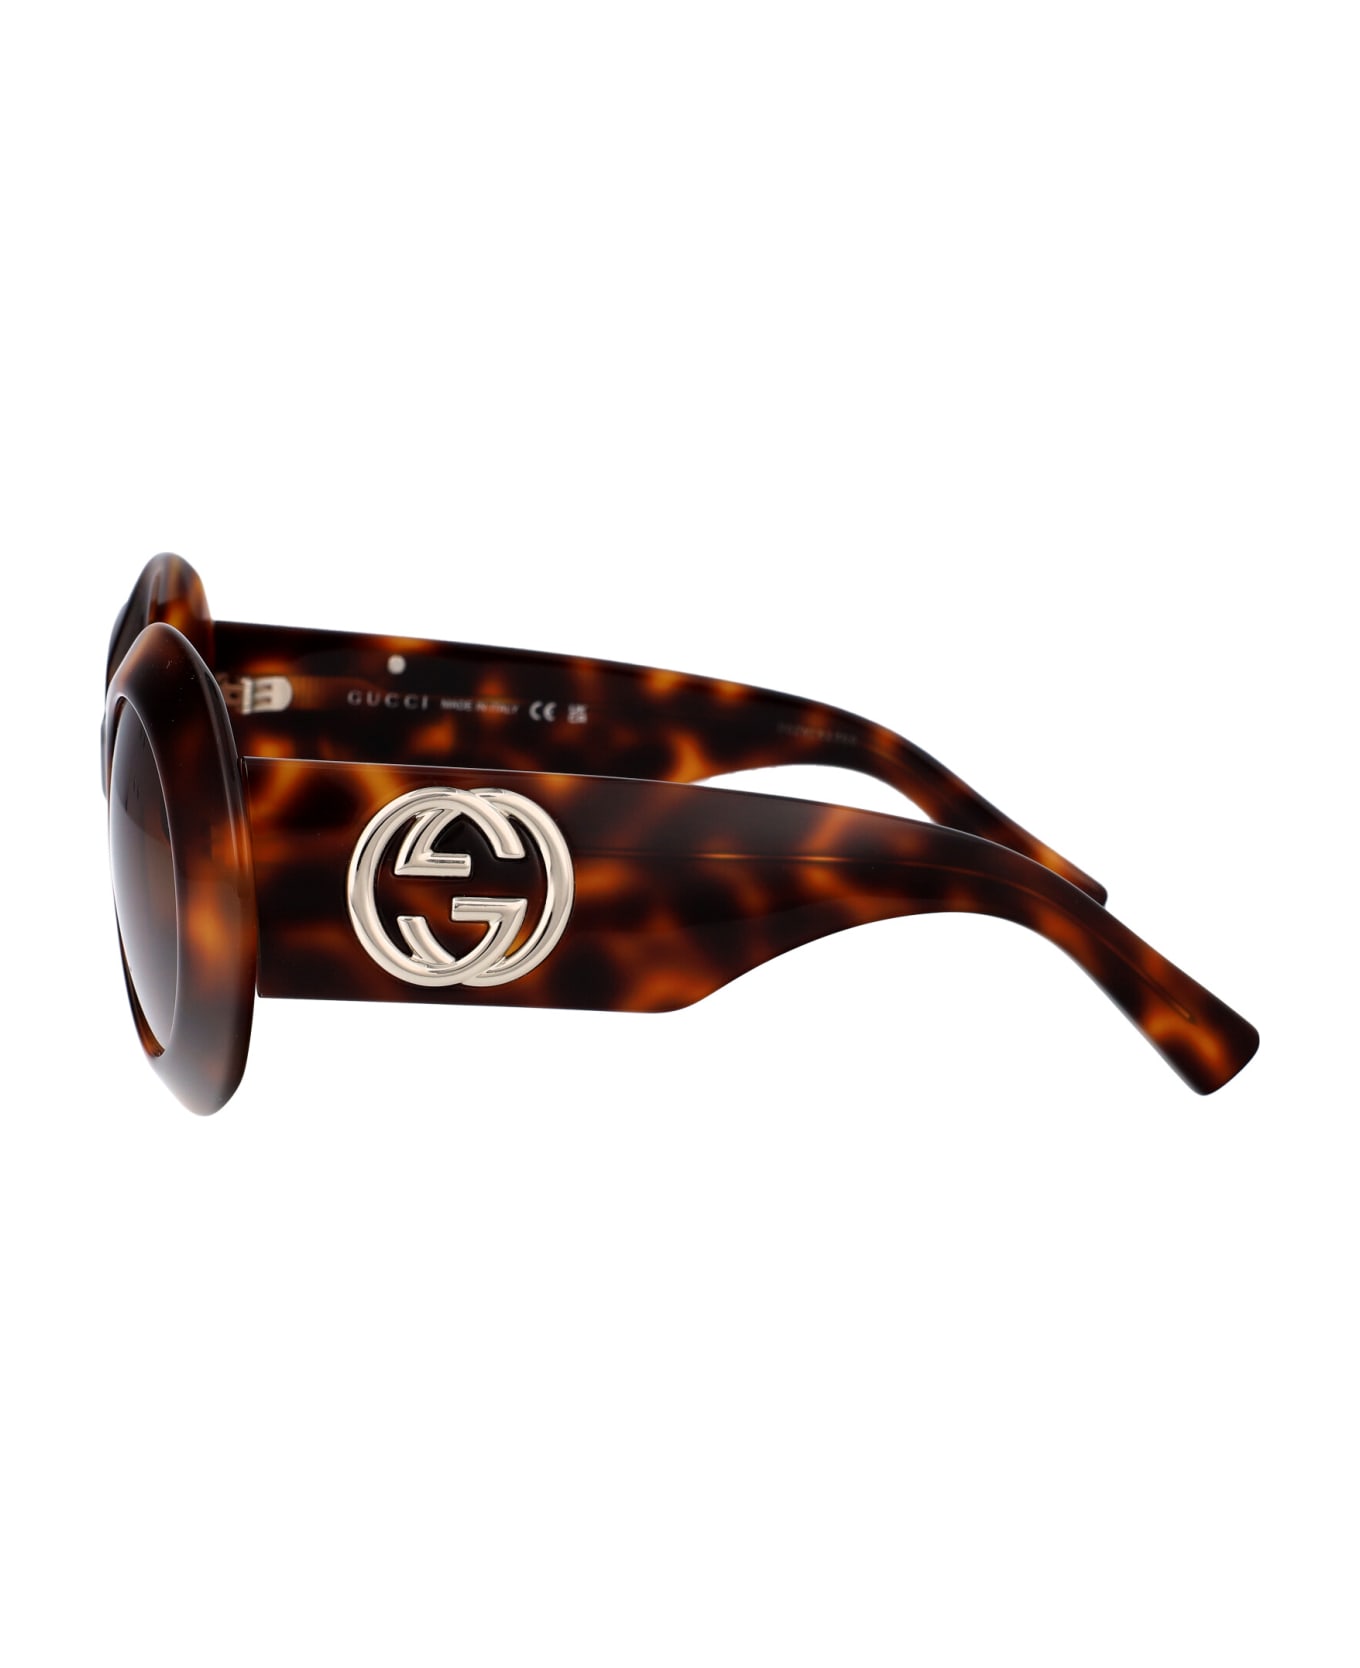 Gucci Eyewear Gg1647s Sunglasses - 009 HAVANA HAVANA BROWN